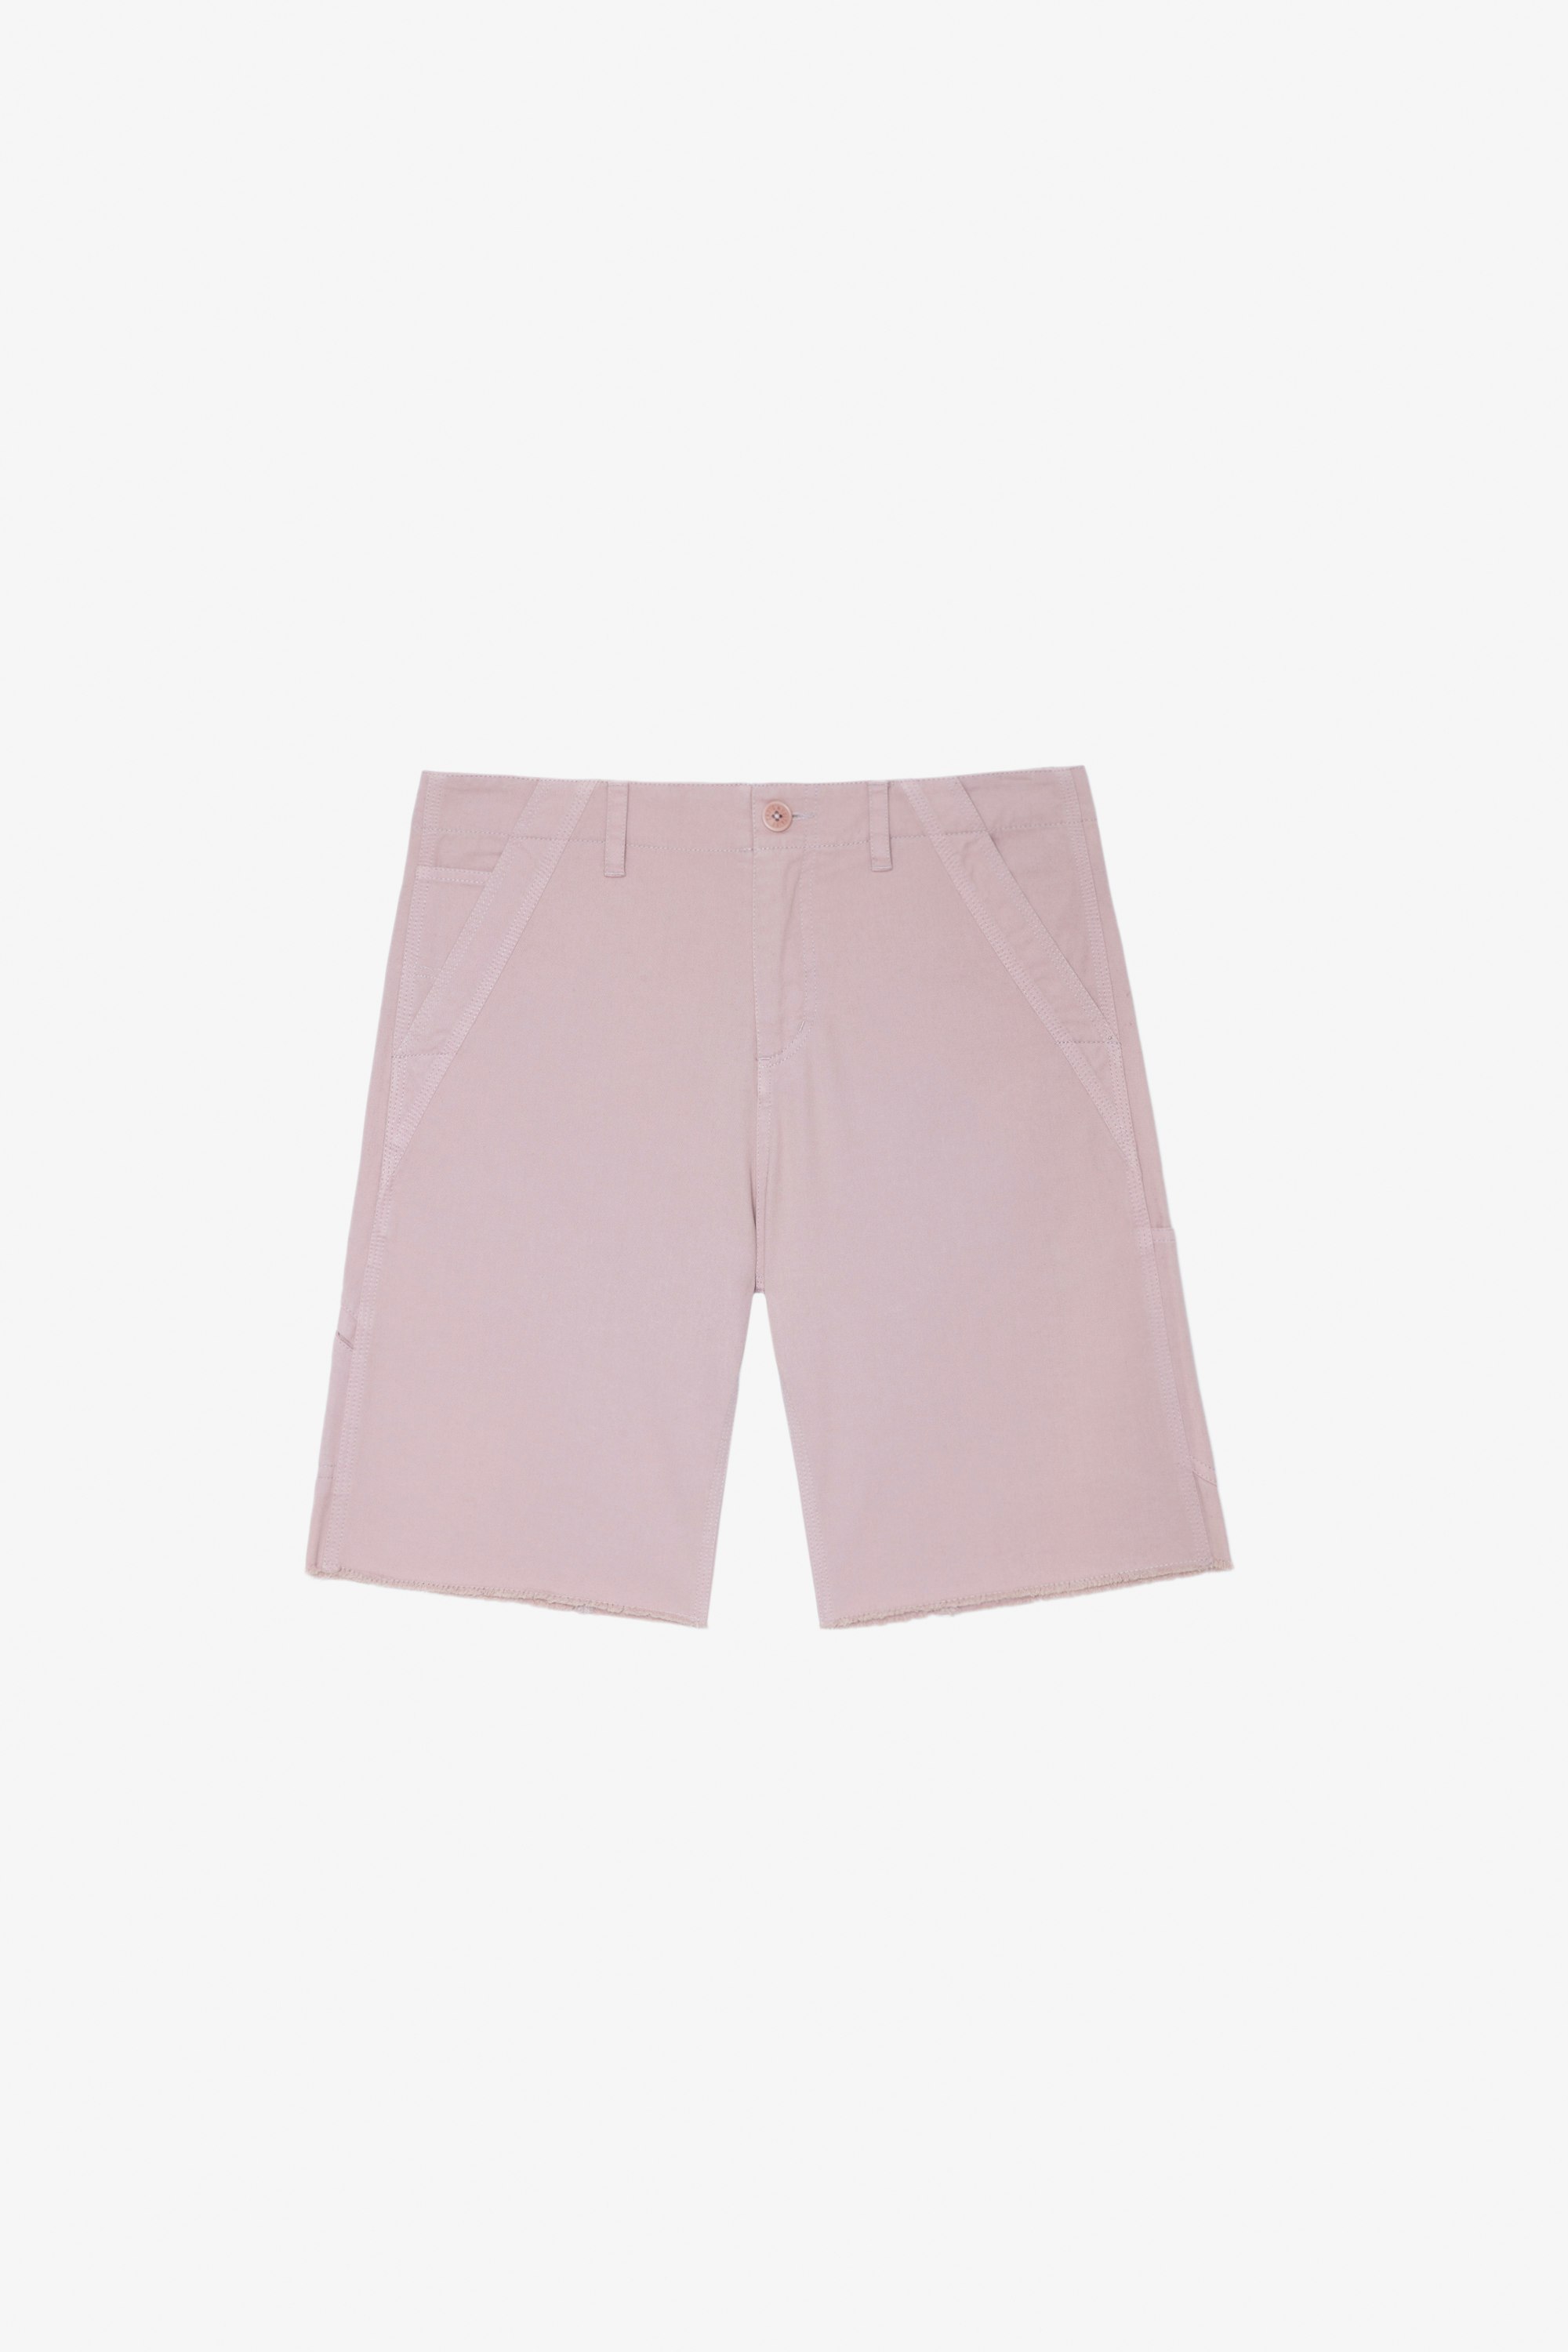 Pantalón corto Parks Pantalón corto estilo cargo de algodón color morado con varios bolsillos Hombre